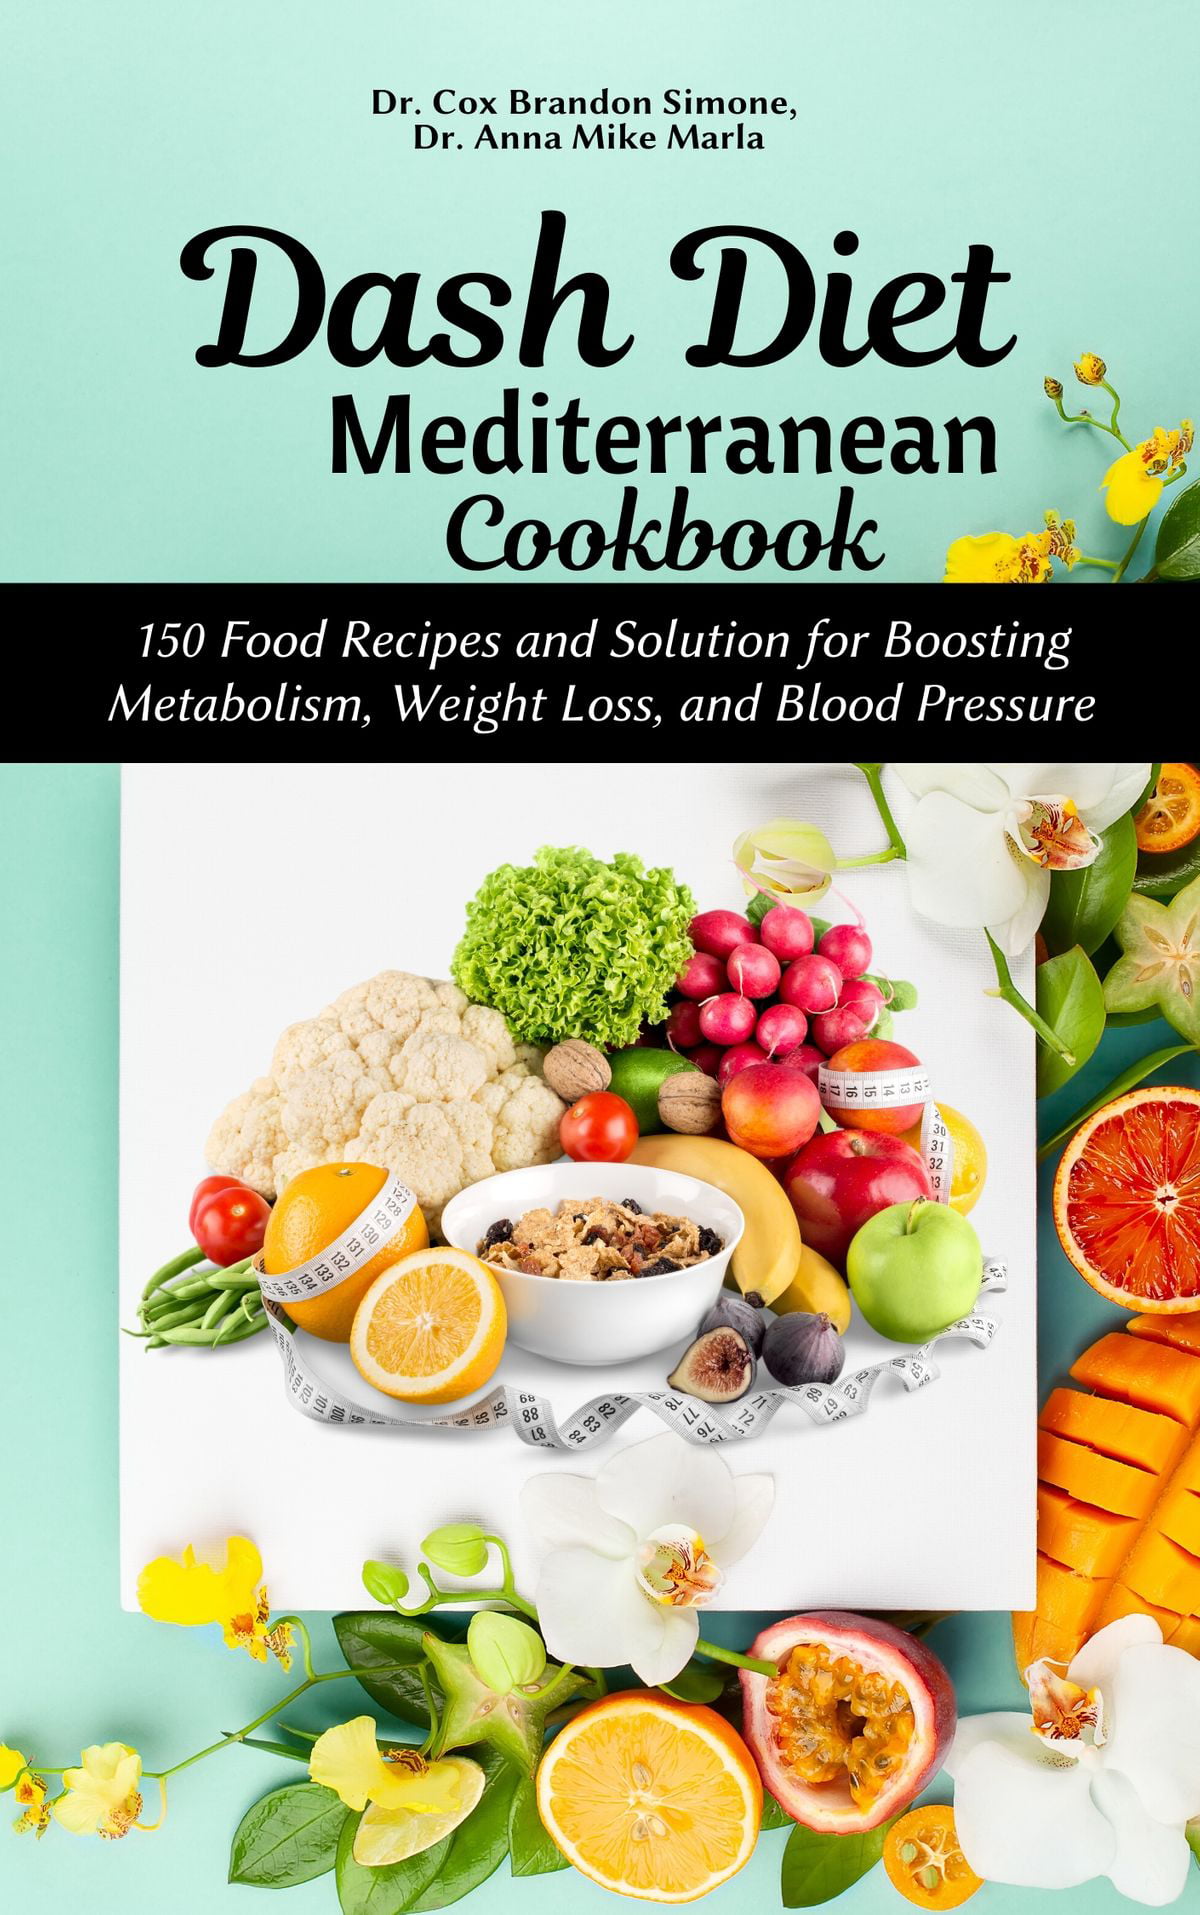 Dash Diet Mediterranean Cookbook - eBook - Walmart.com - Walmart.com